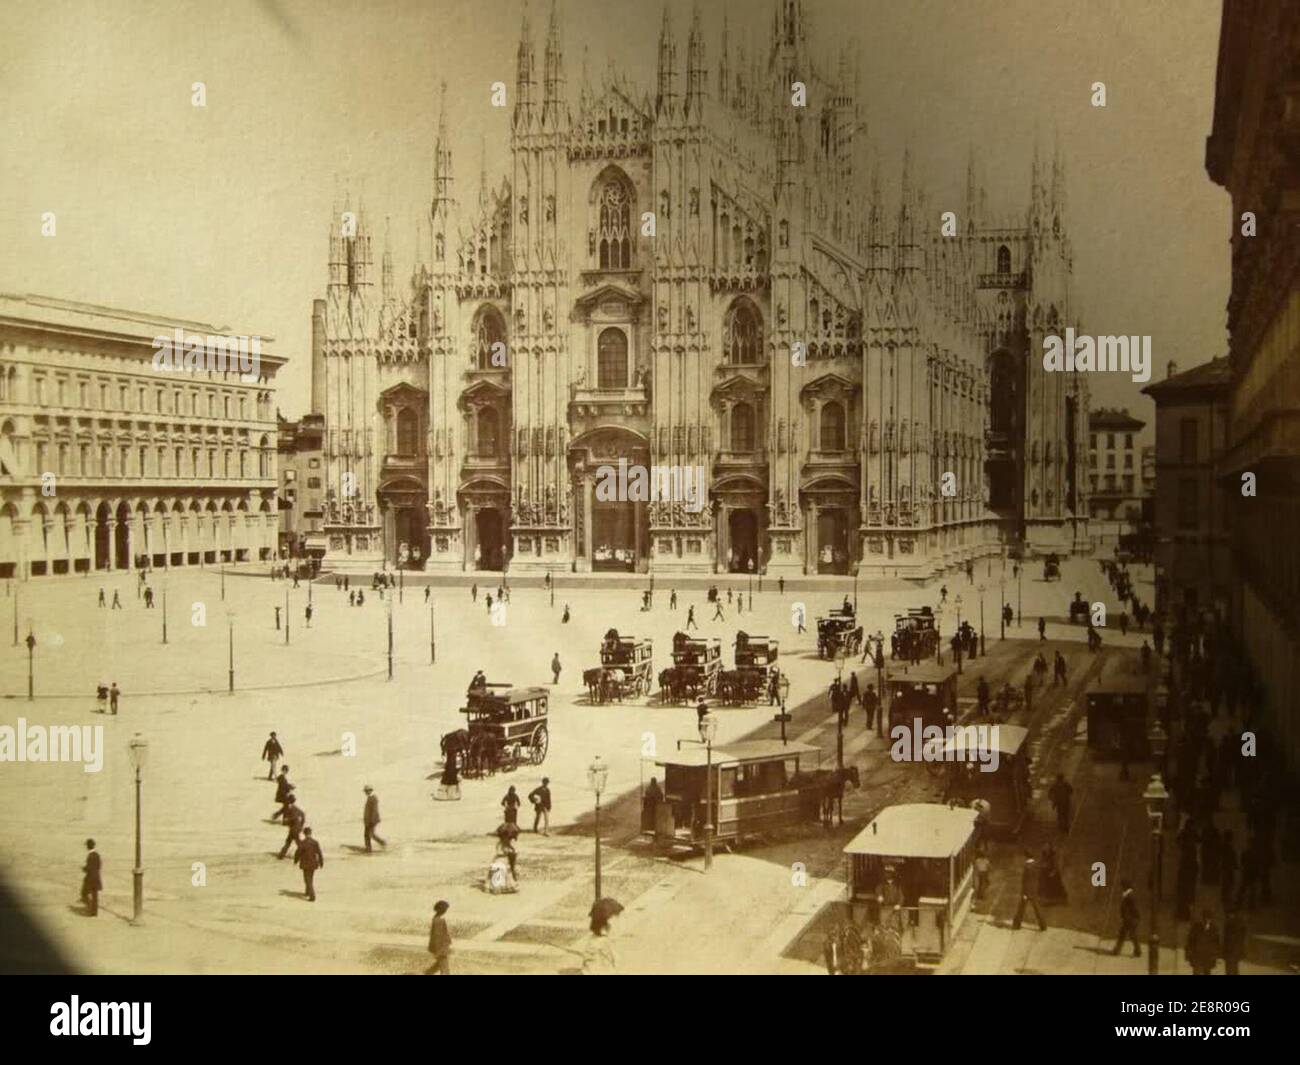 Milano piazza Duomo ca1880 Stock Photo - Alamy